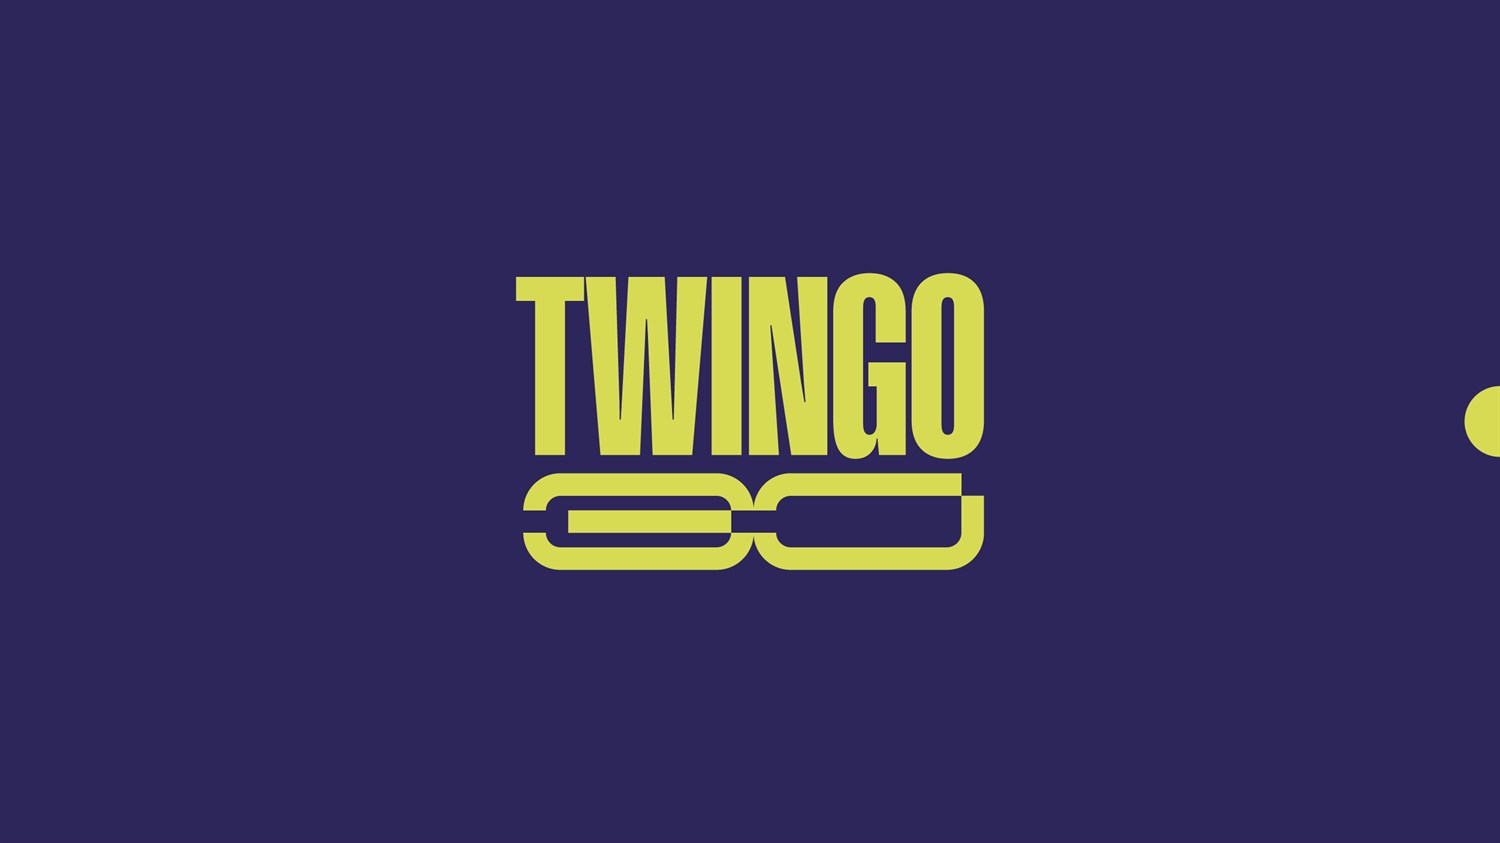 Twingo is celebrating its 30th anniversary 